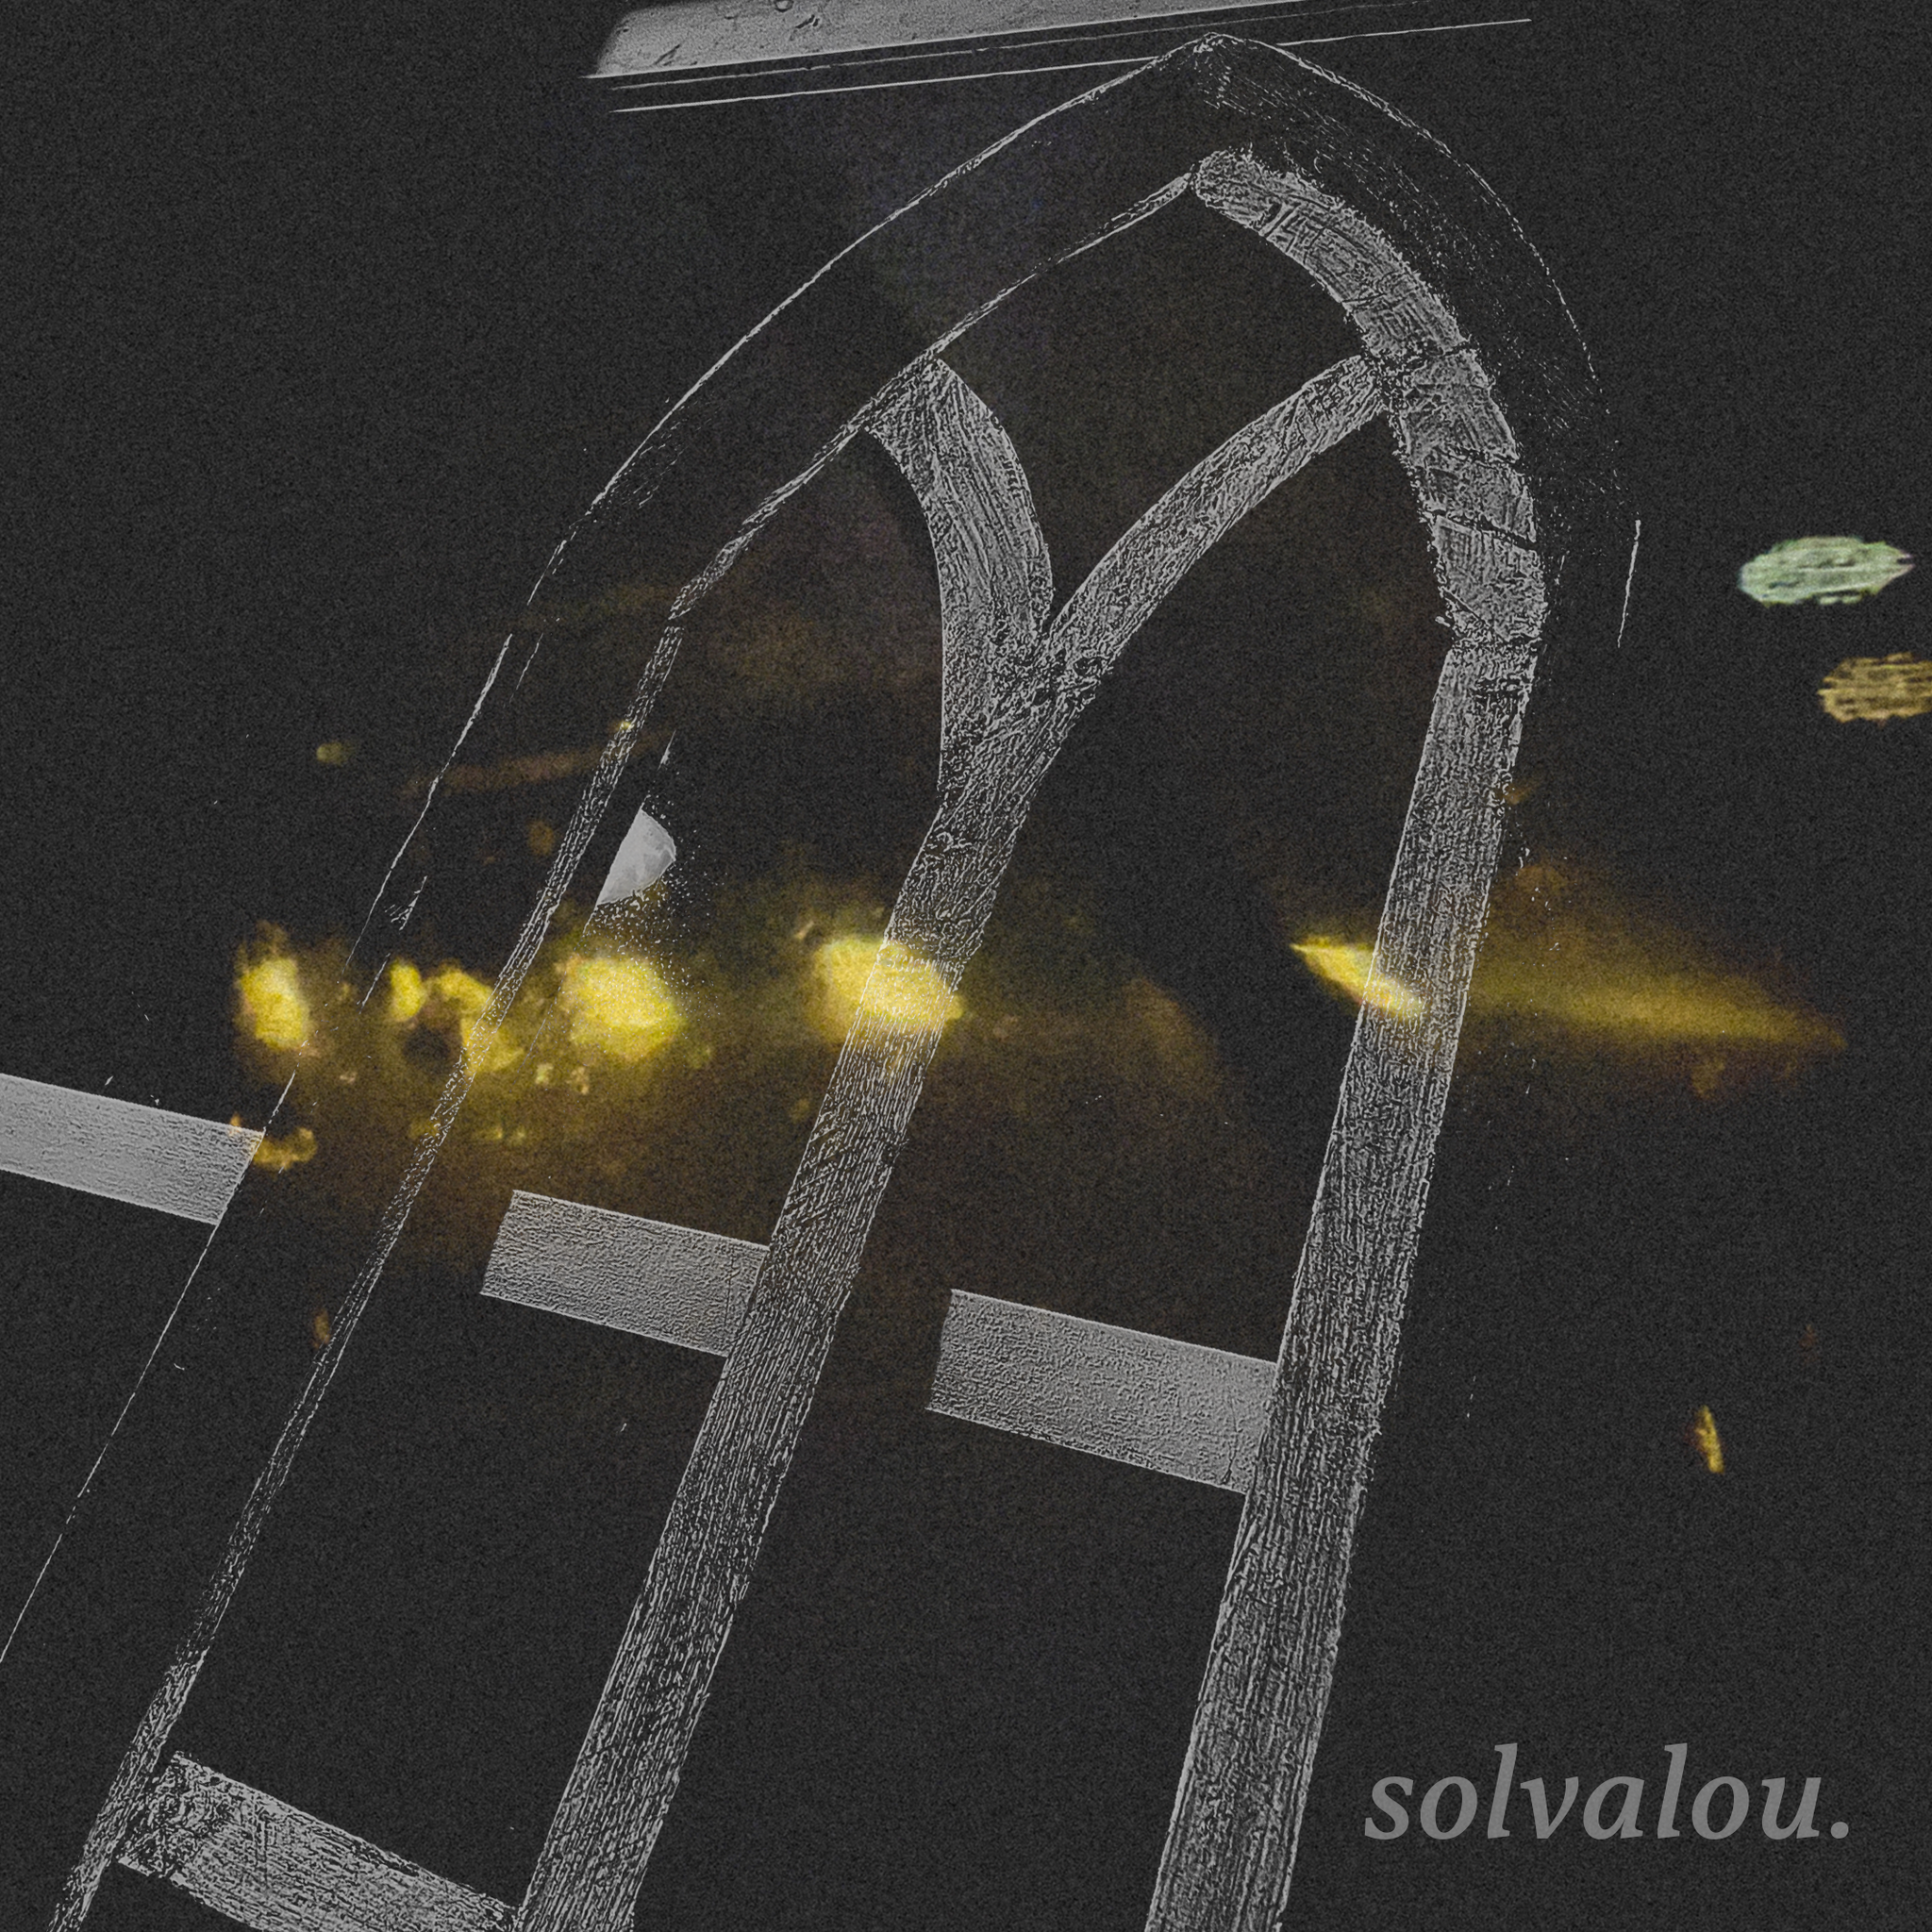 SOLVALOU - Solvalou (cassette)